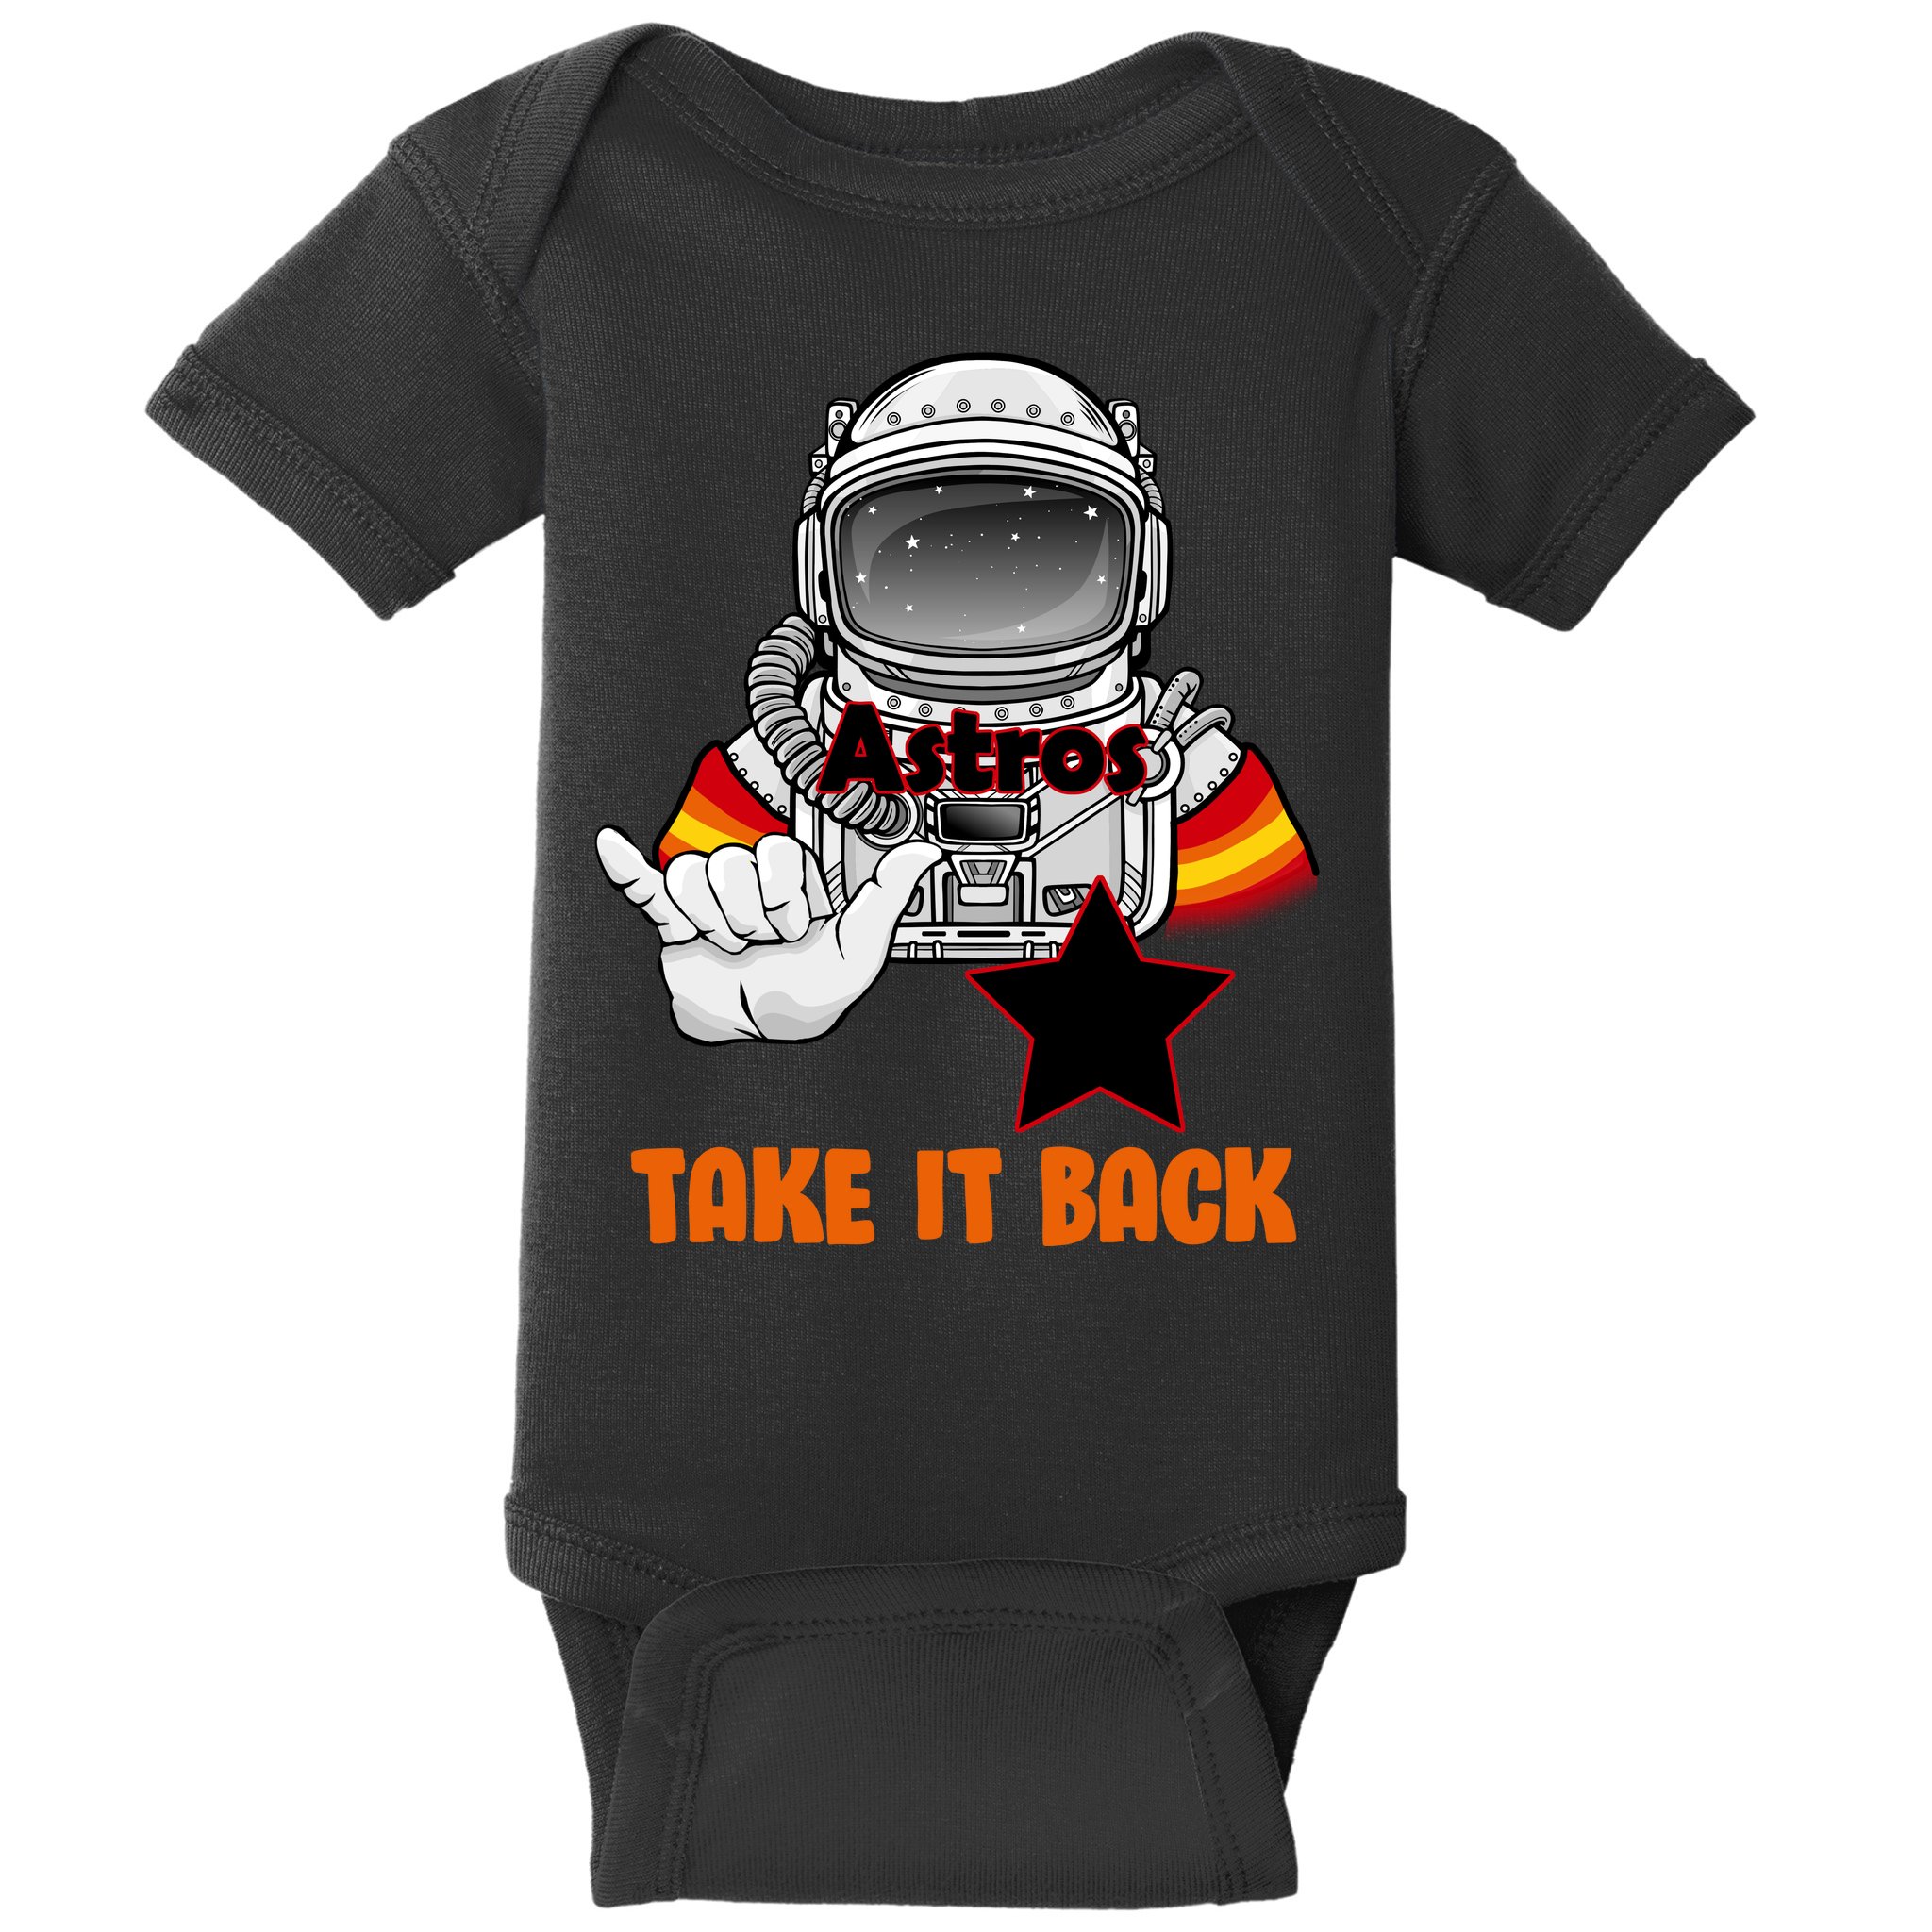 Teeshirtpalace Astros Take It Back T-Shirt